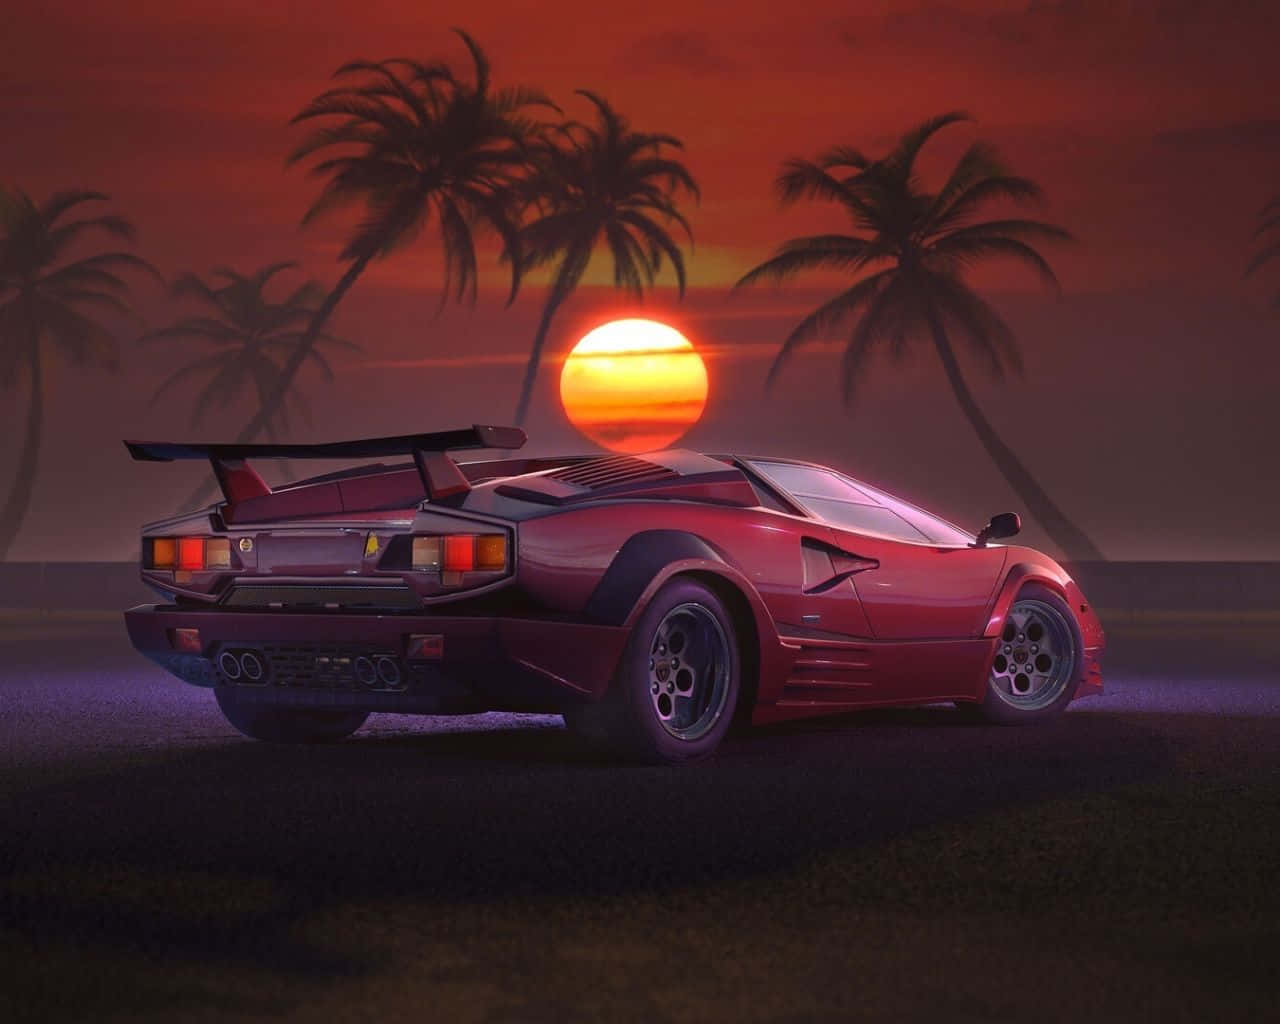 Captivating Sunset Drive Wallpaper